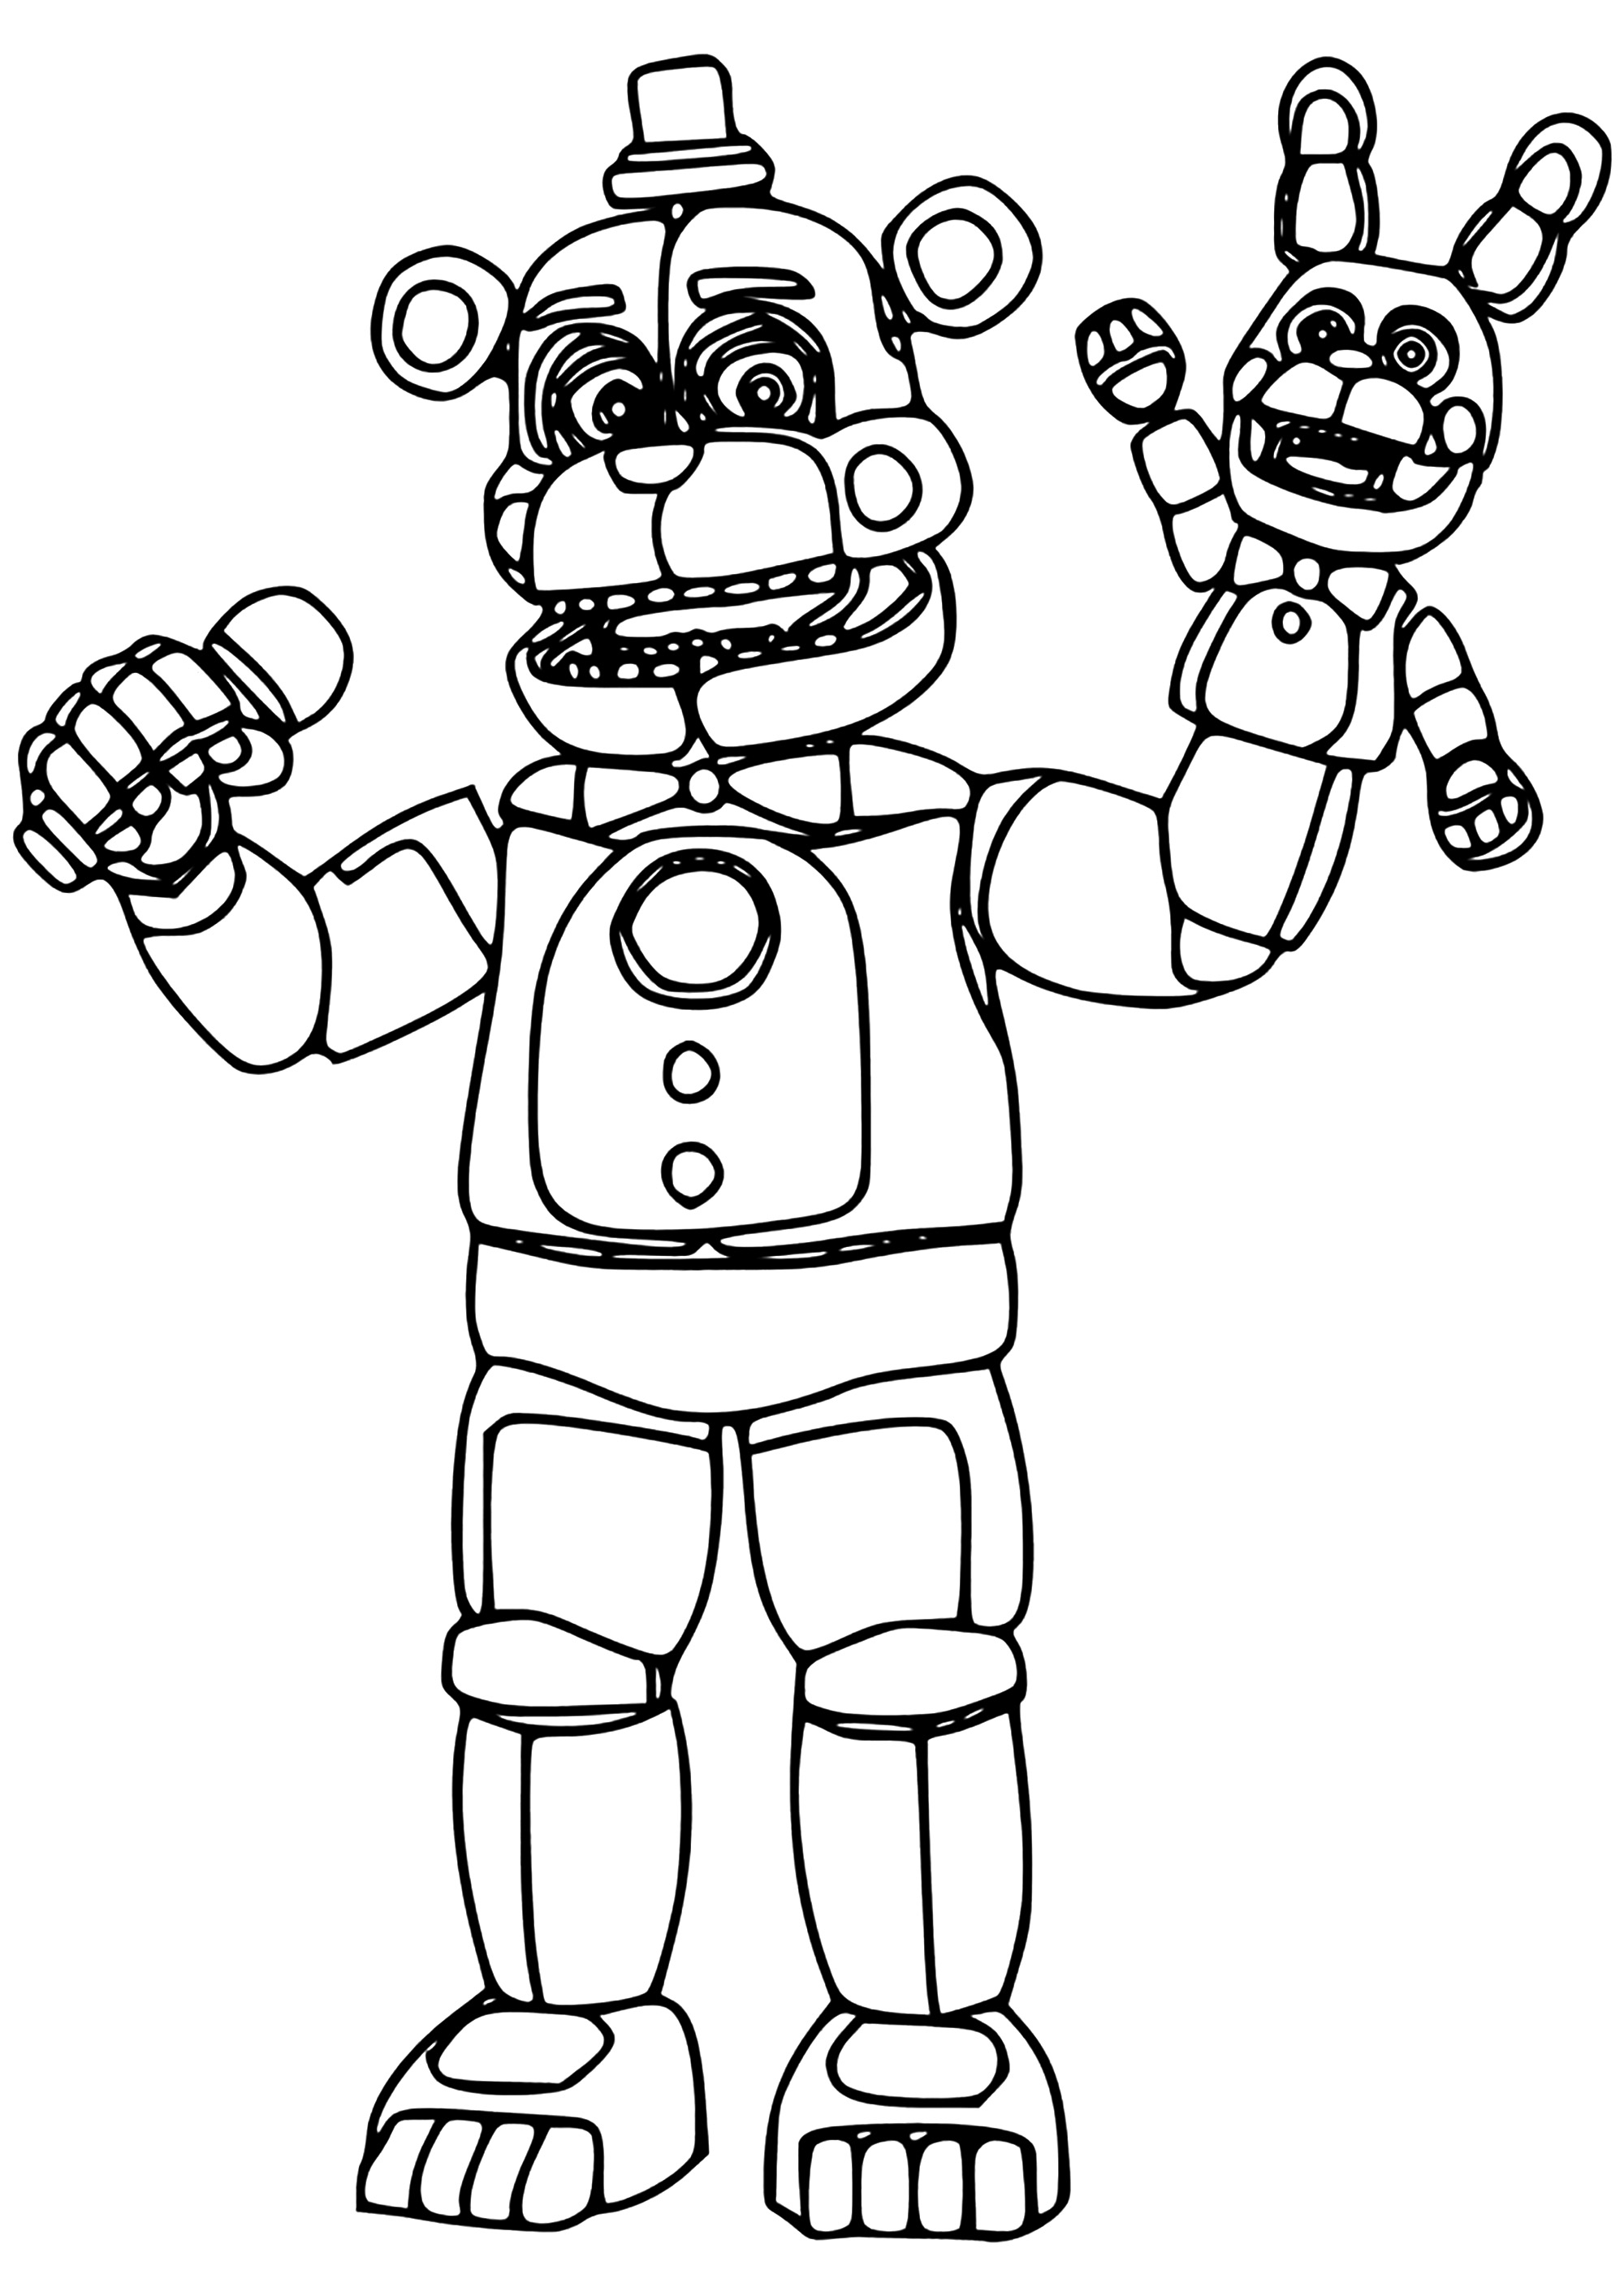 Freddy Fazbear avec une marionnette